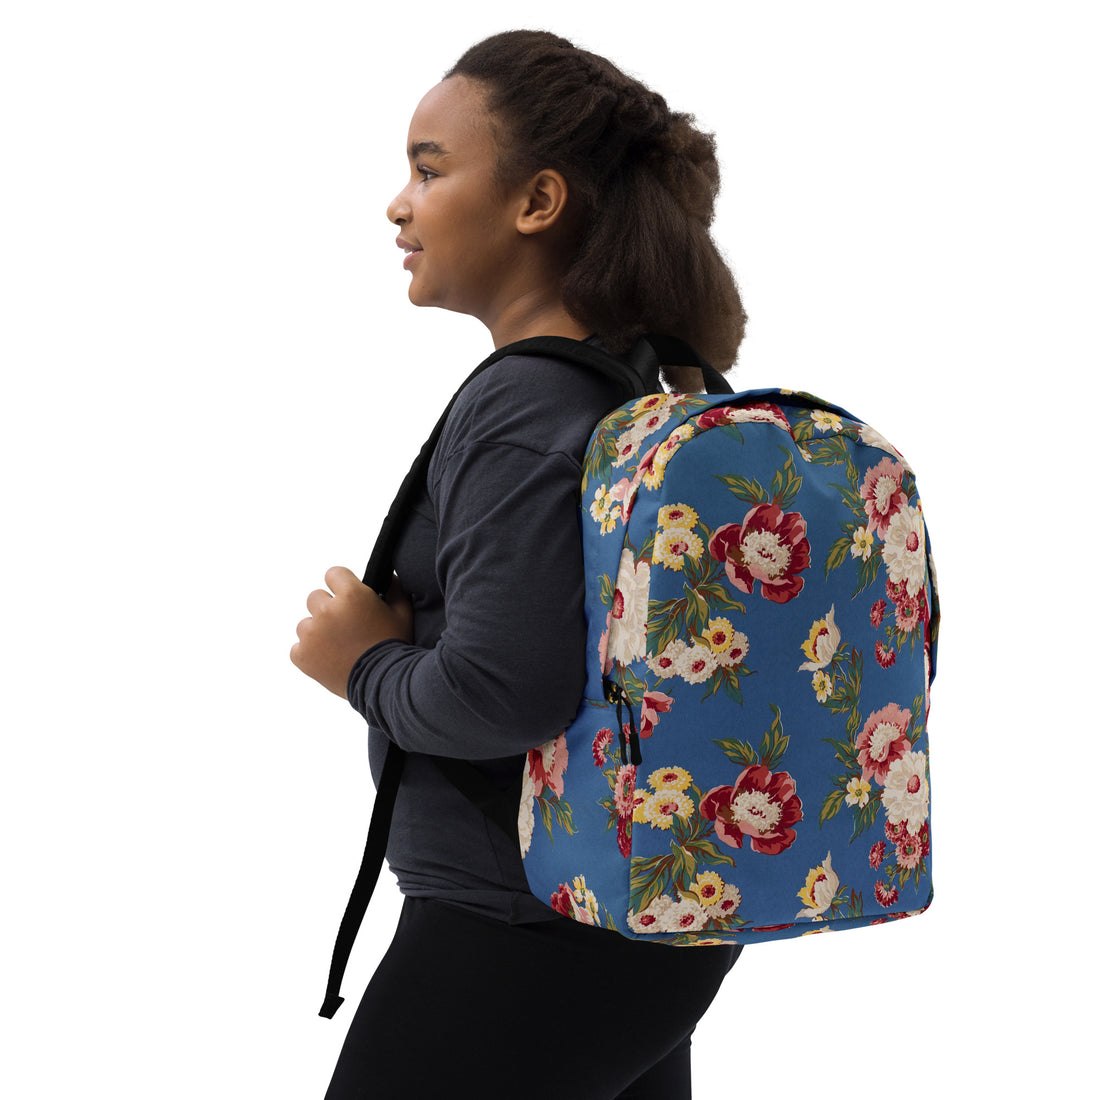 Floral Minimalist Backpack